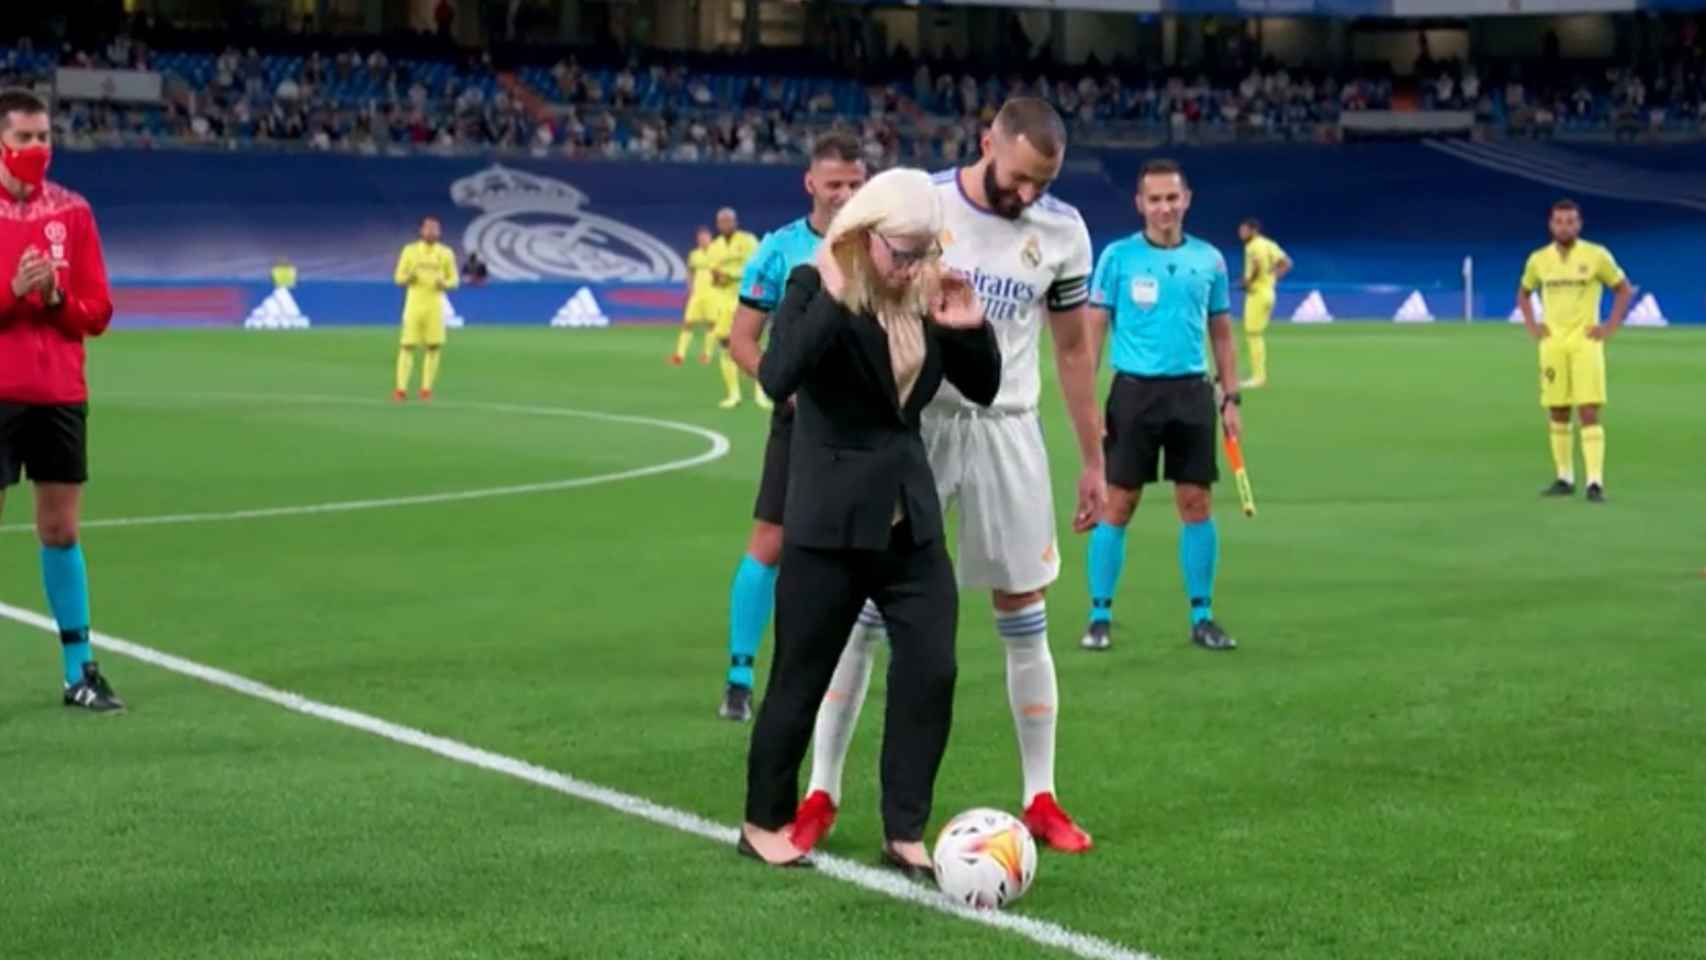 Saque de honor de Susana Rodríguez en el Santiago Bernabéu antes del Real Madrid - Villarreal